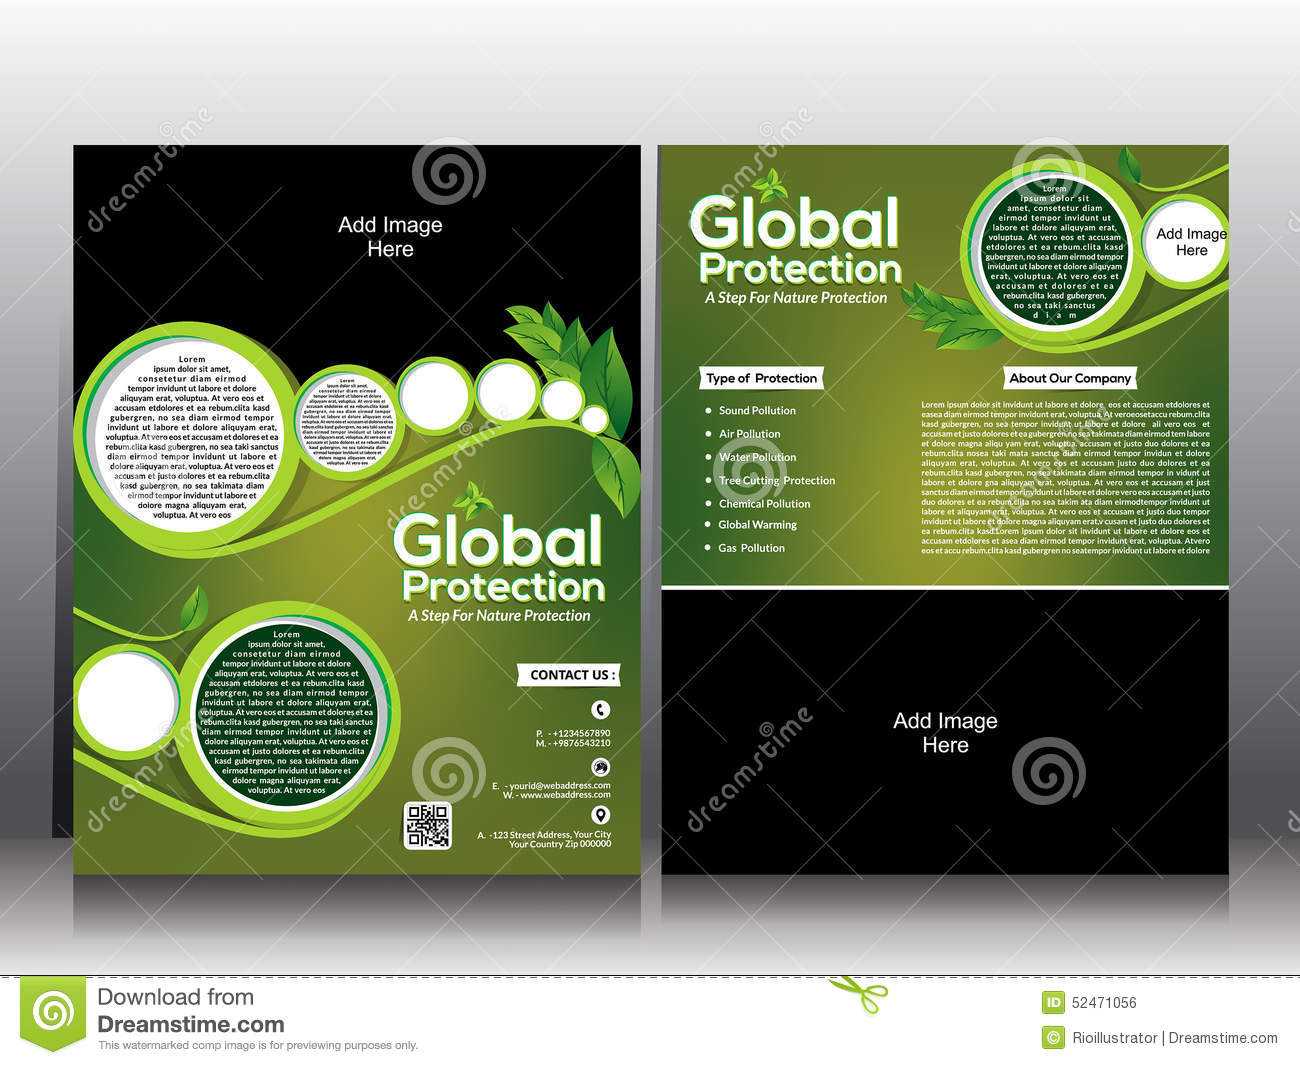 Brochure Template Illustrator Free Download | How To Design Intended For Adobe Illustrator Brochure Templates Free Download